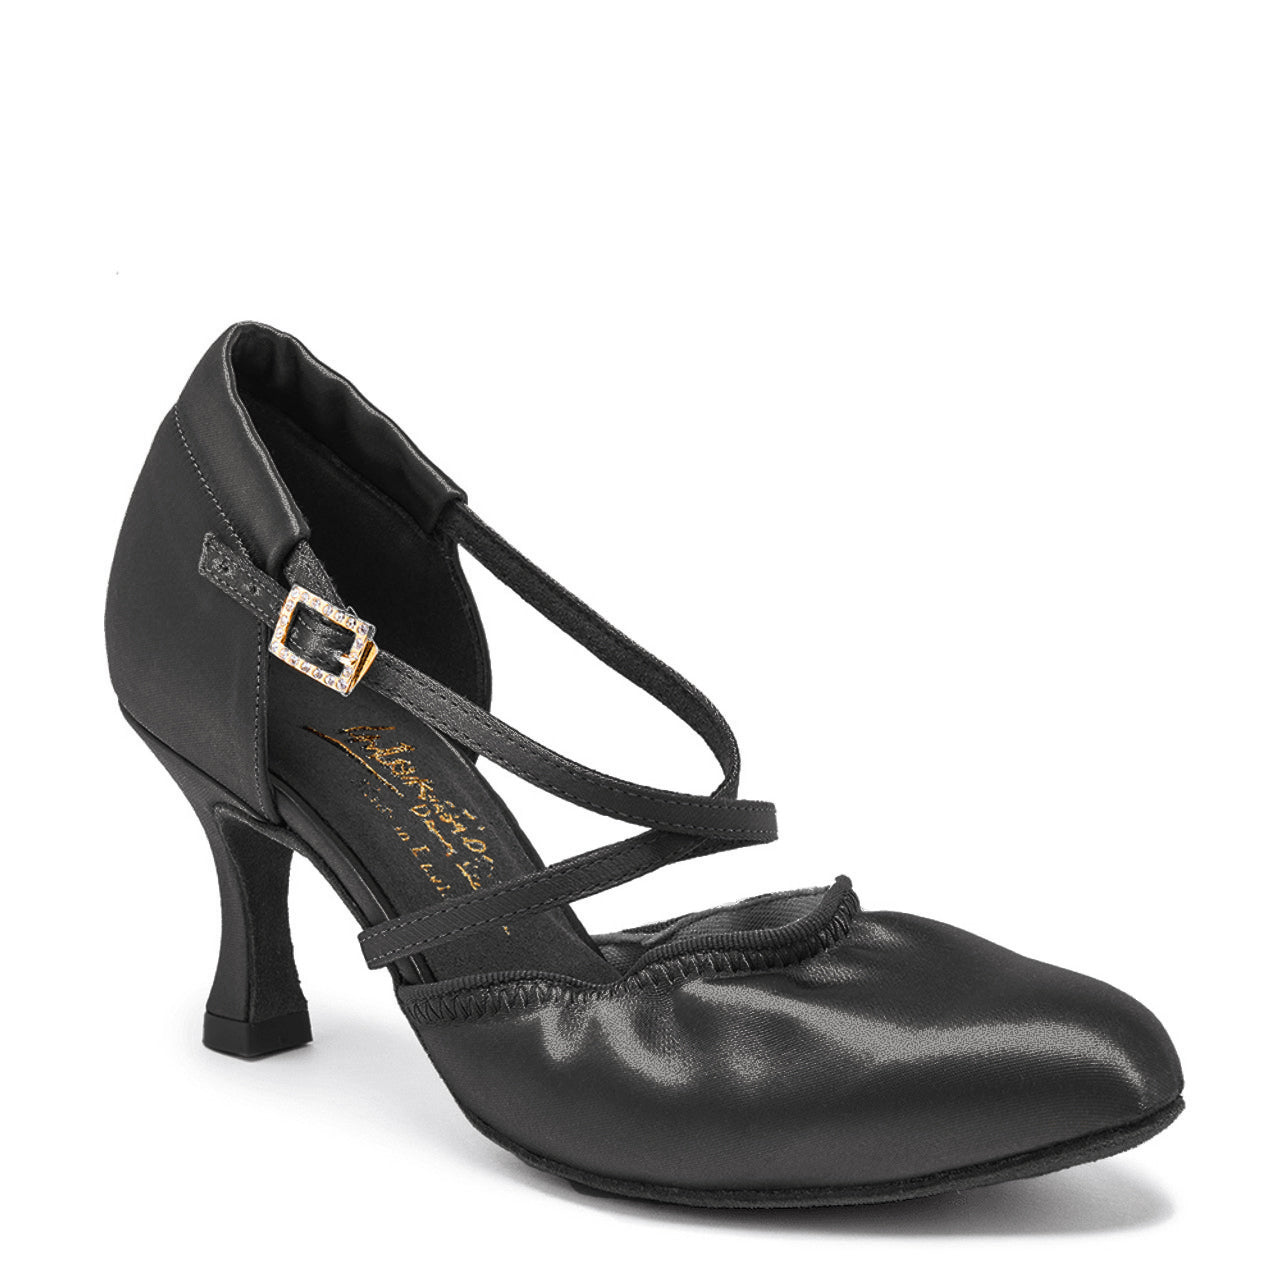 American Smooth Stye by International Dance Shoes IDS Ladies Satin Ballroom Shoe in Stock AMERICAN FLEX